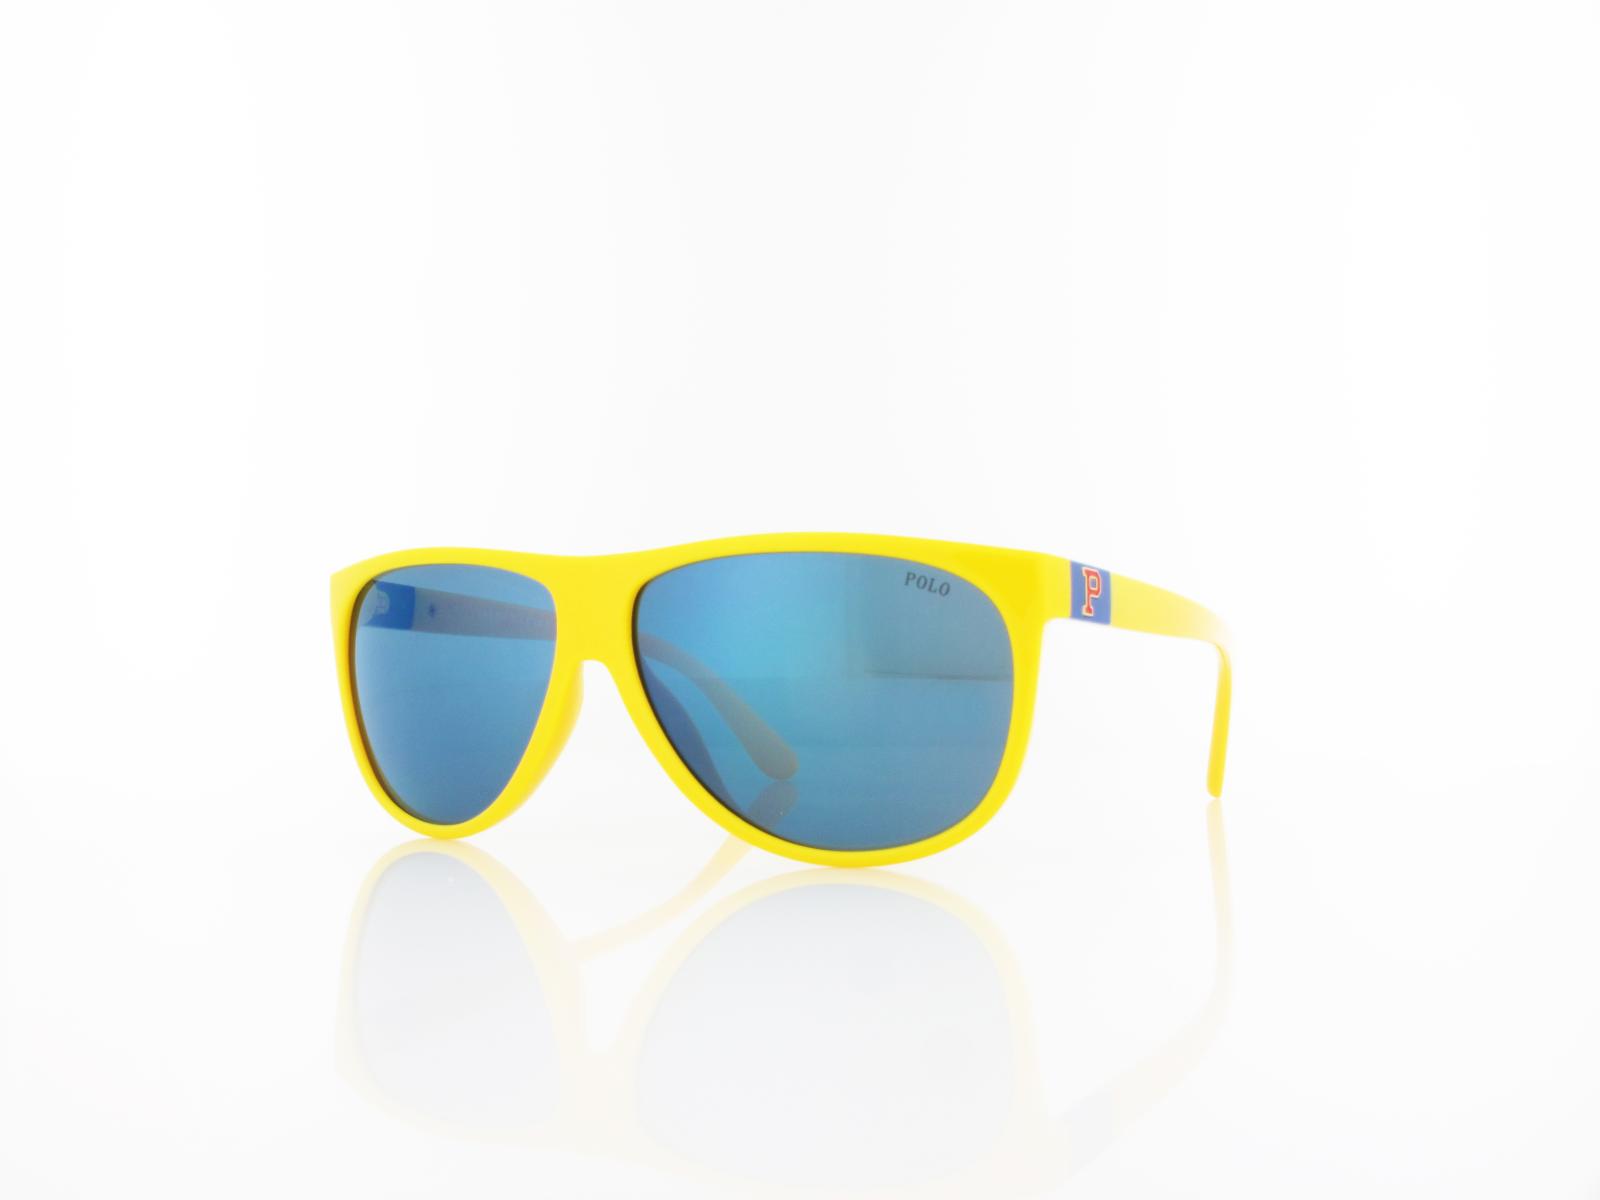 Polo Ralph Lauren | PH4174 596155 60 | shiny yellow / mirror blue